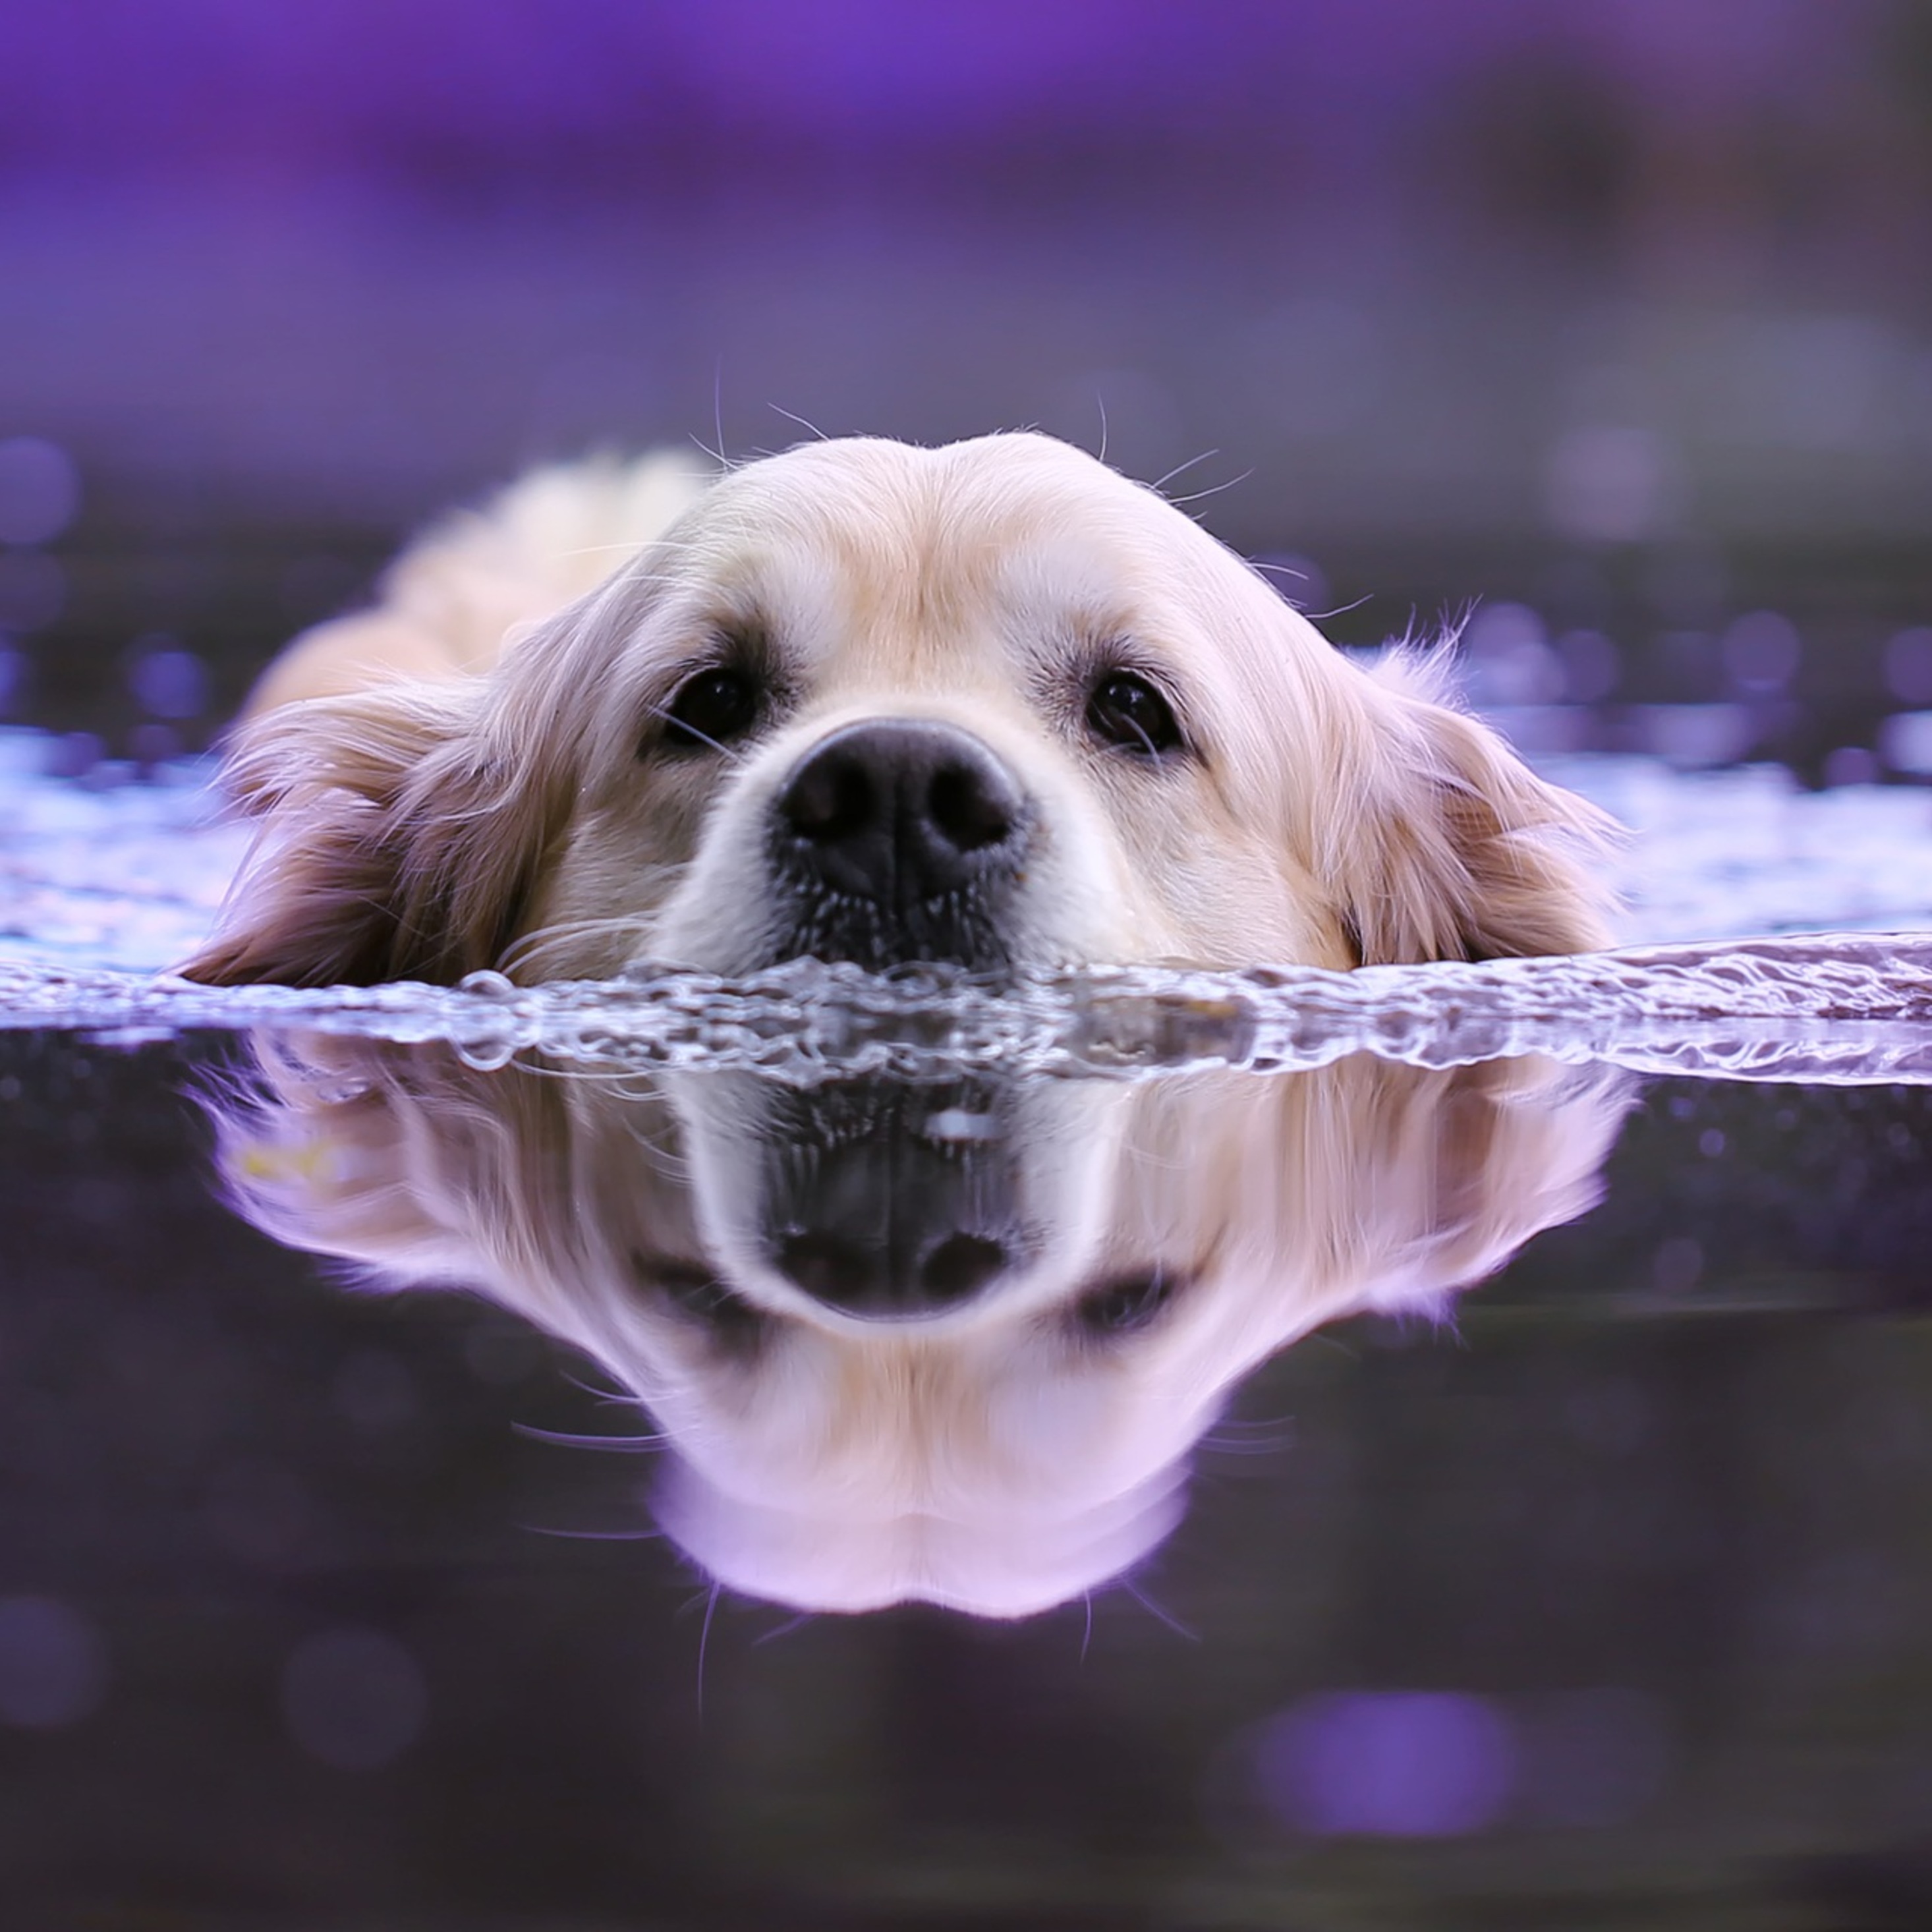 Dog Swimming iPad Pro Retina Display HD 4k Wallpaper, Image, Background, Photo and Picture